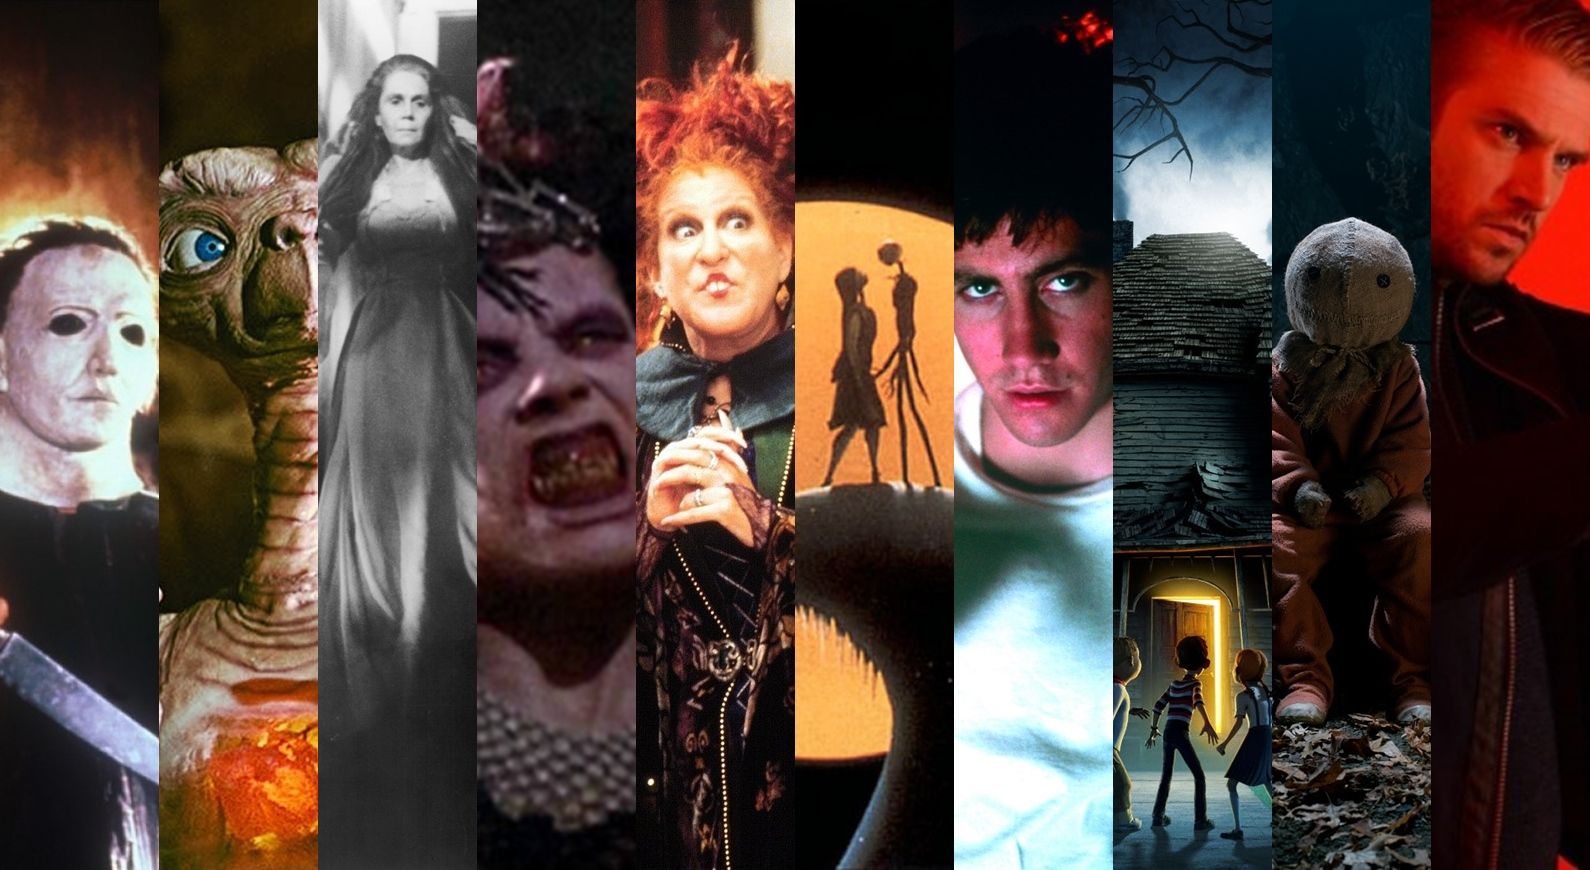 Halloween (Filme), Trailer, Sinopse e Curiosidades - Cinema10